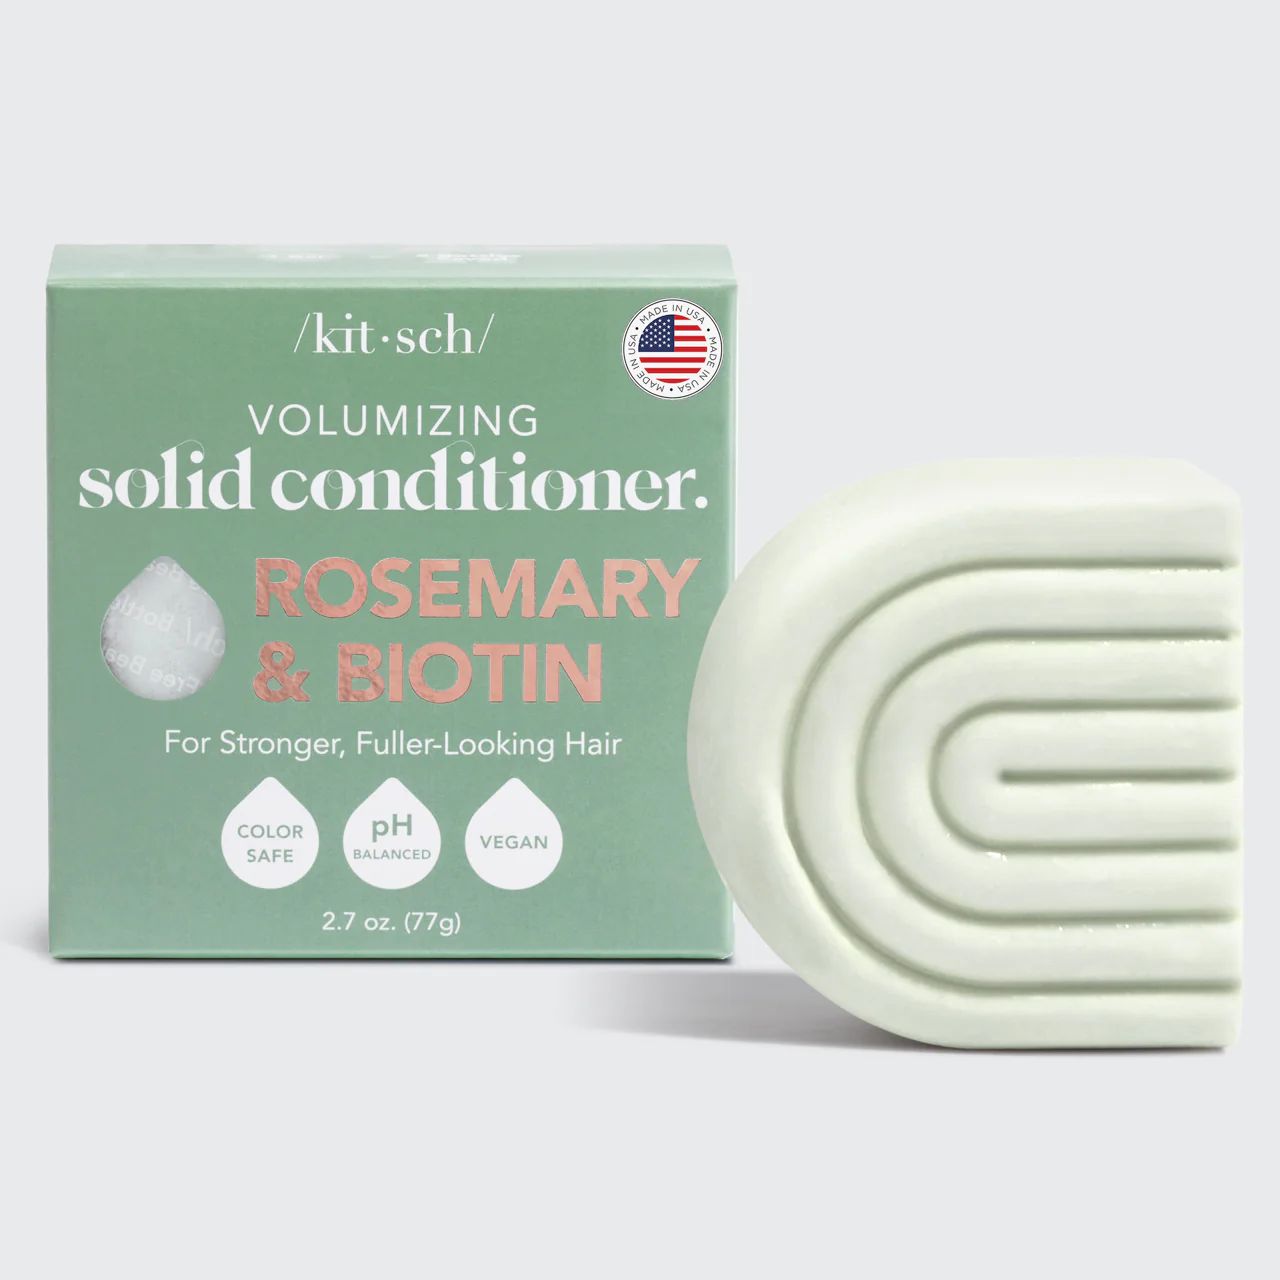 Rosemary & Biotin Volumizing Solid Conditioner | Kitsch